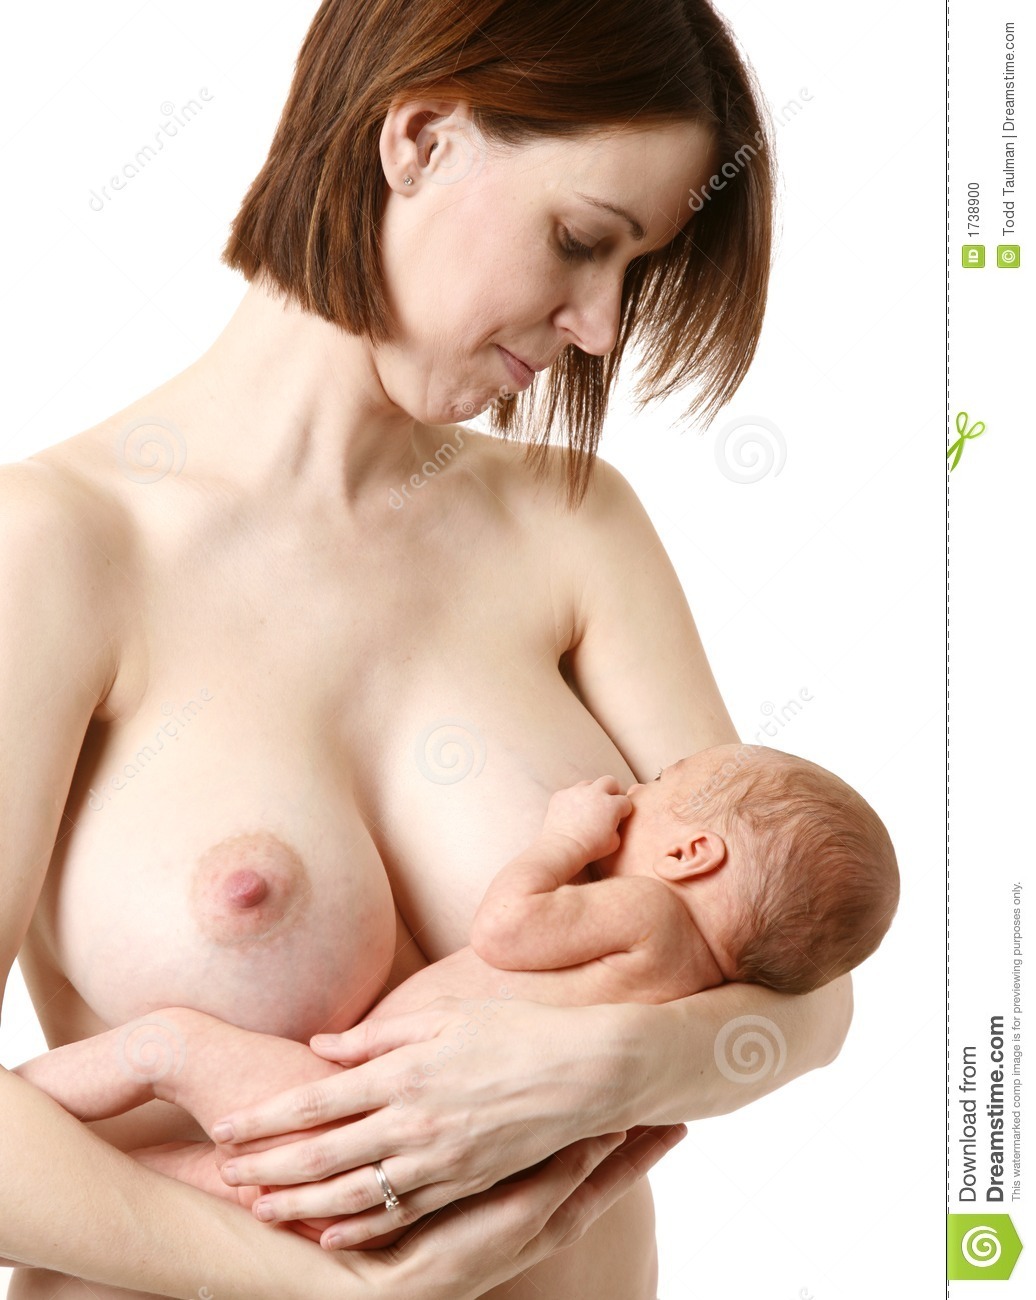 Shemale lactating mom 3 on rus.sexviptube.com